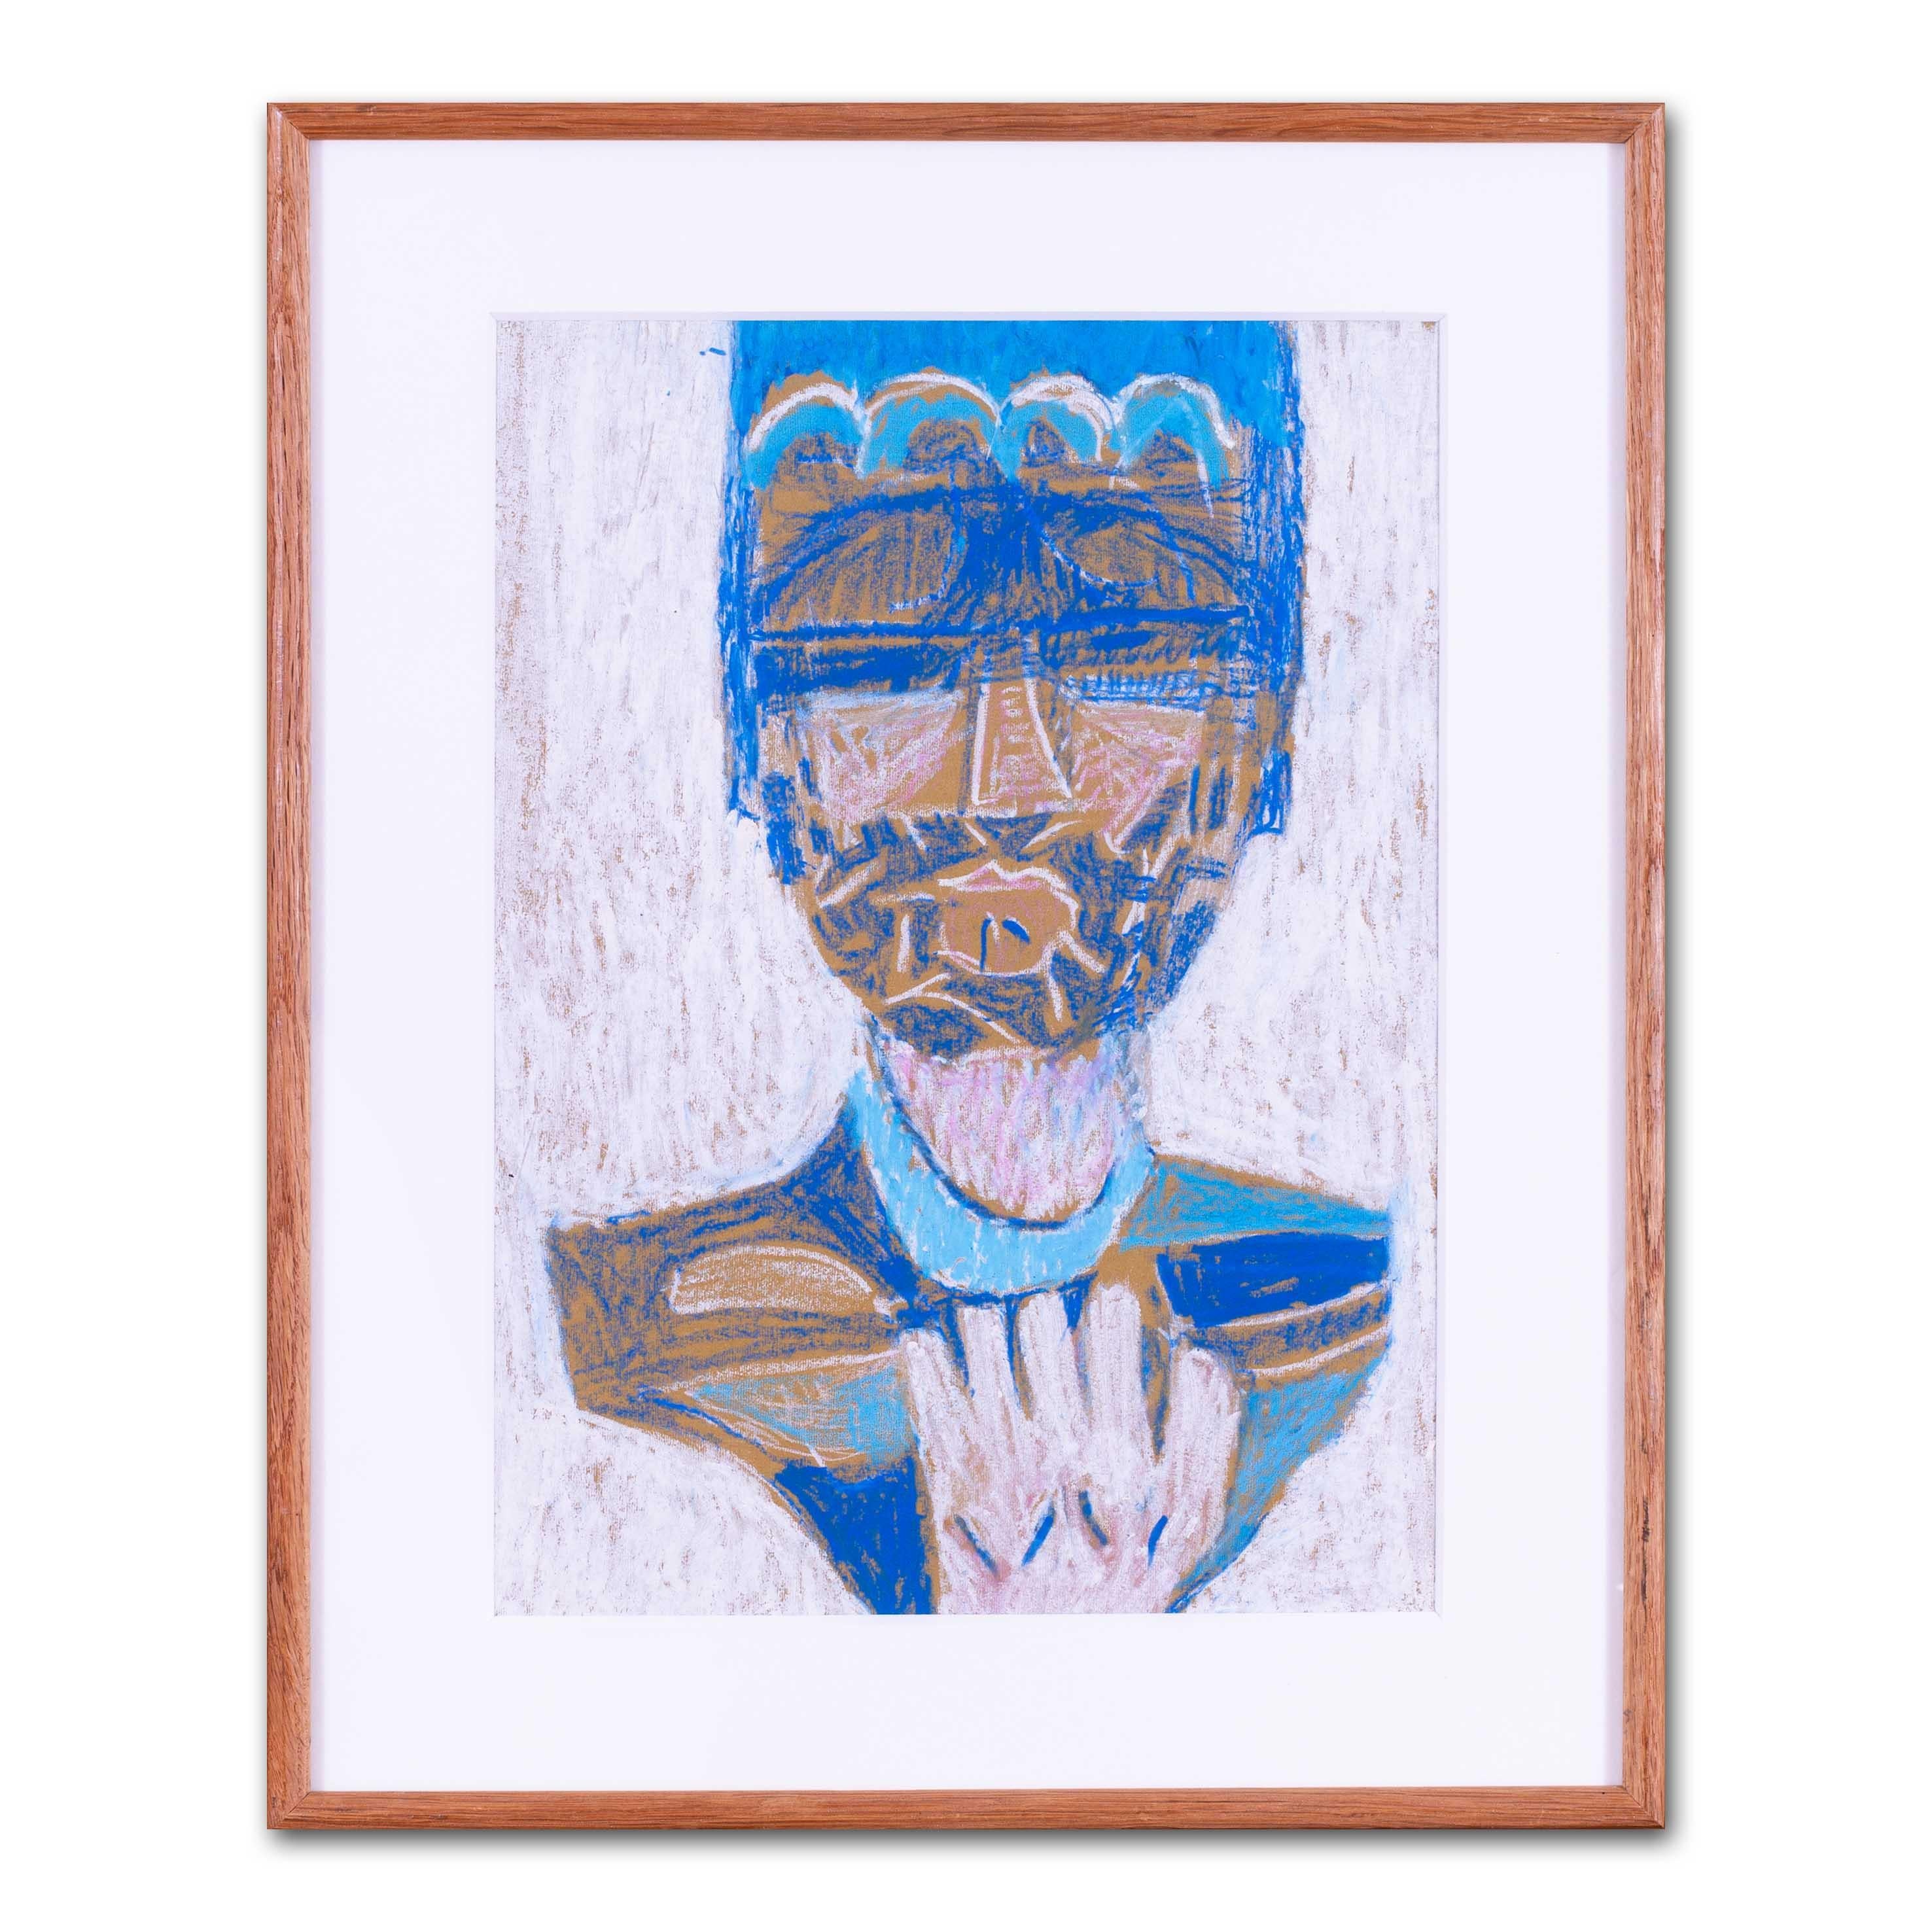 Abstract mythological portrait in blue by Modern British artist Ewart Johns